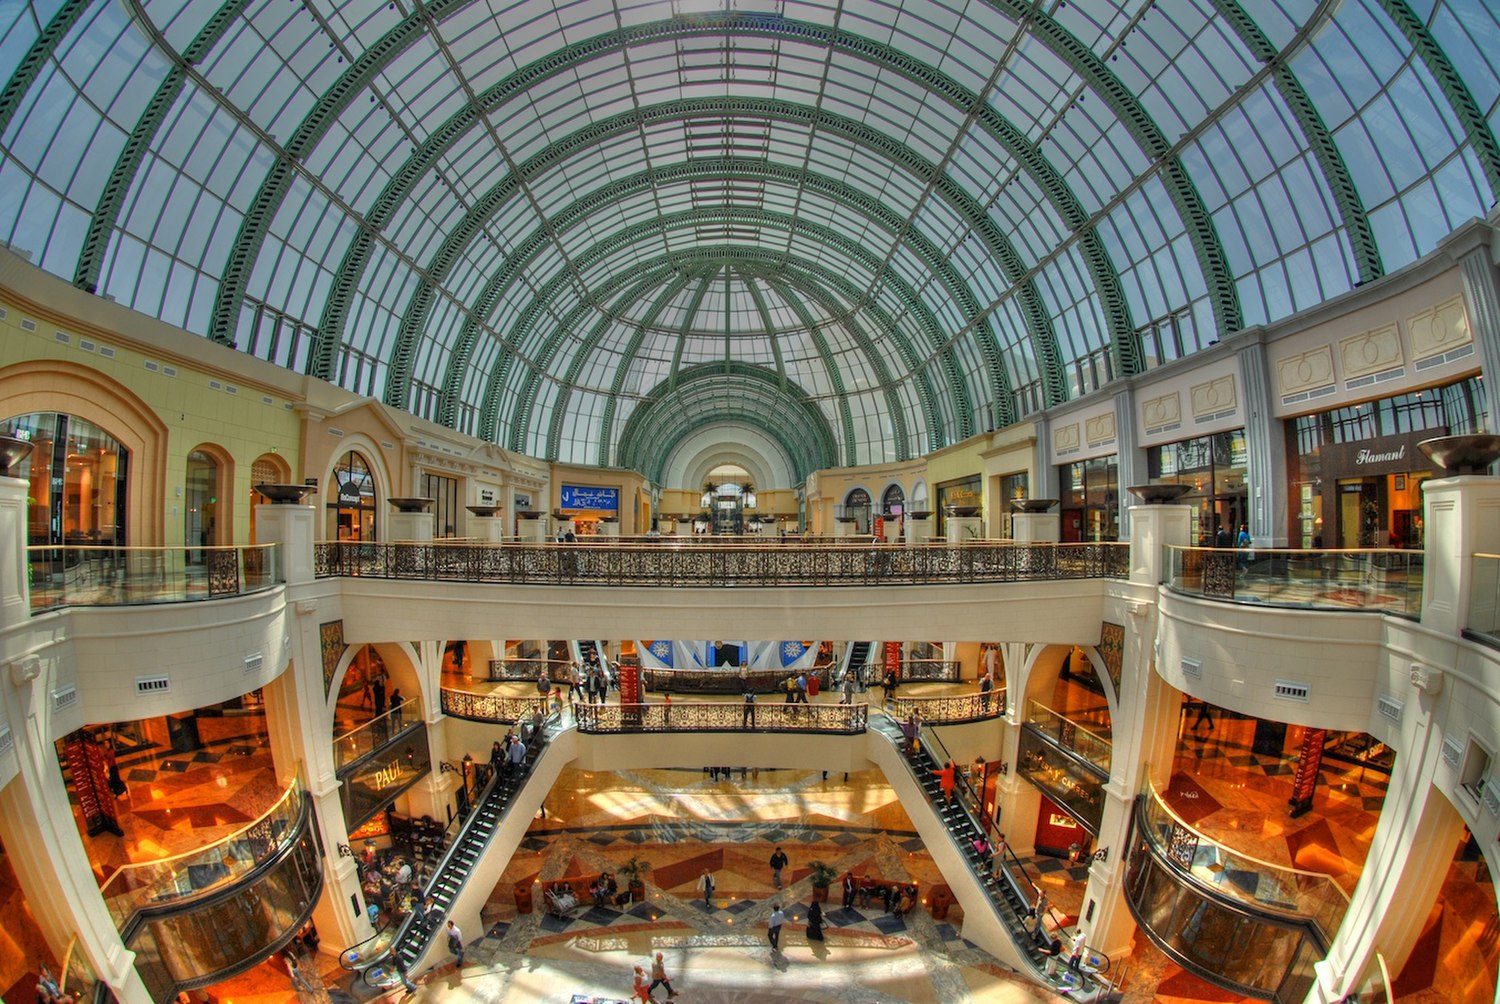 Shopping center - Wikipedia